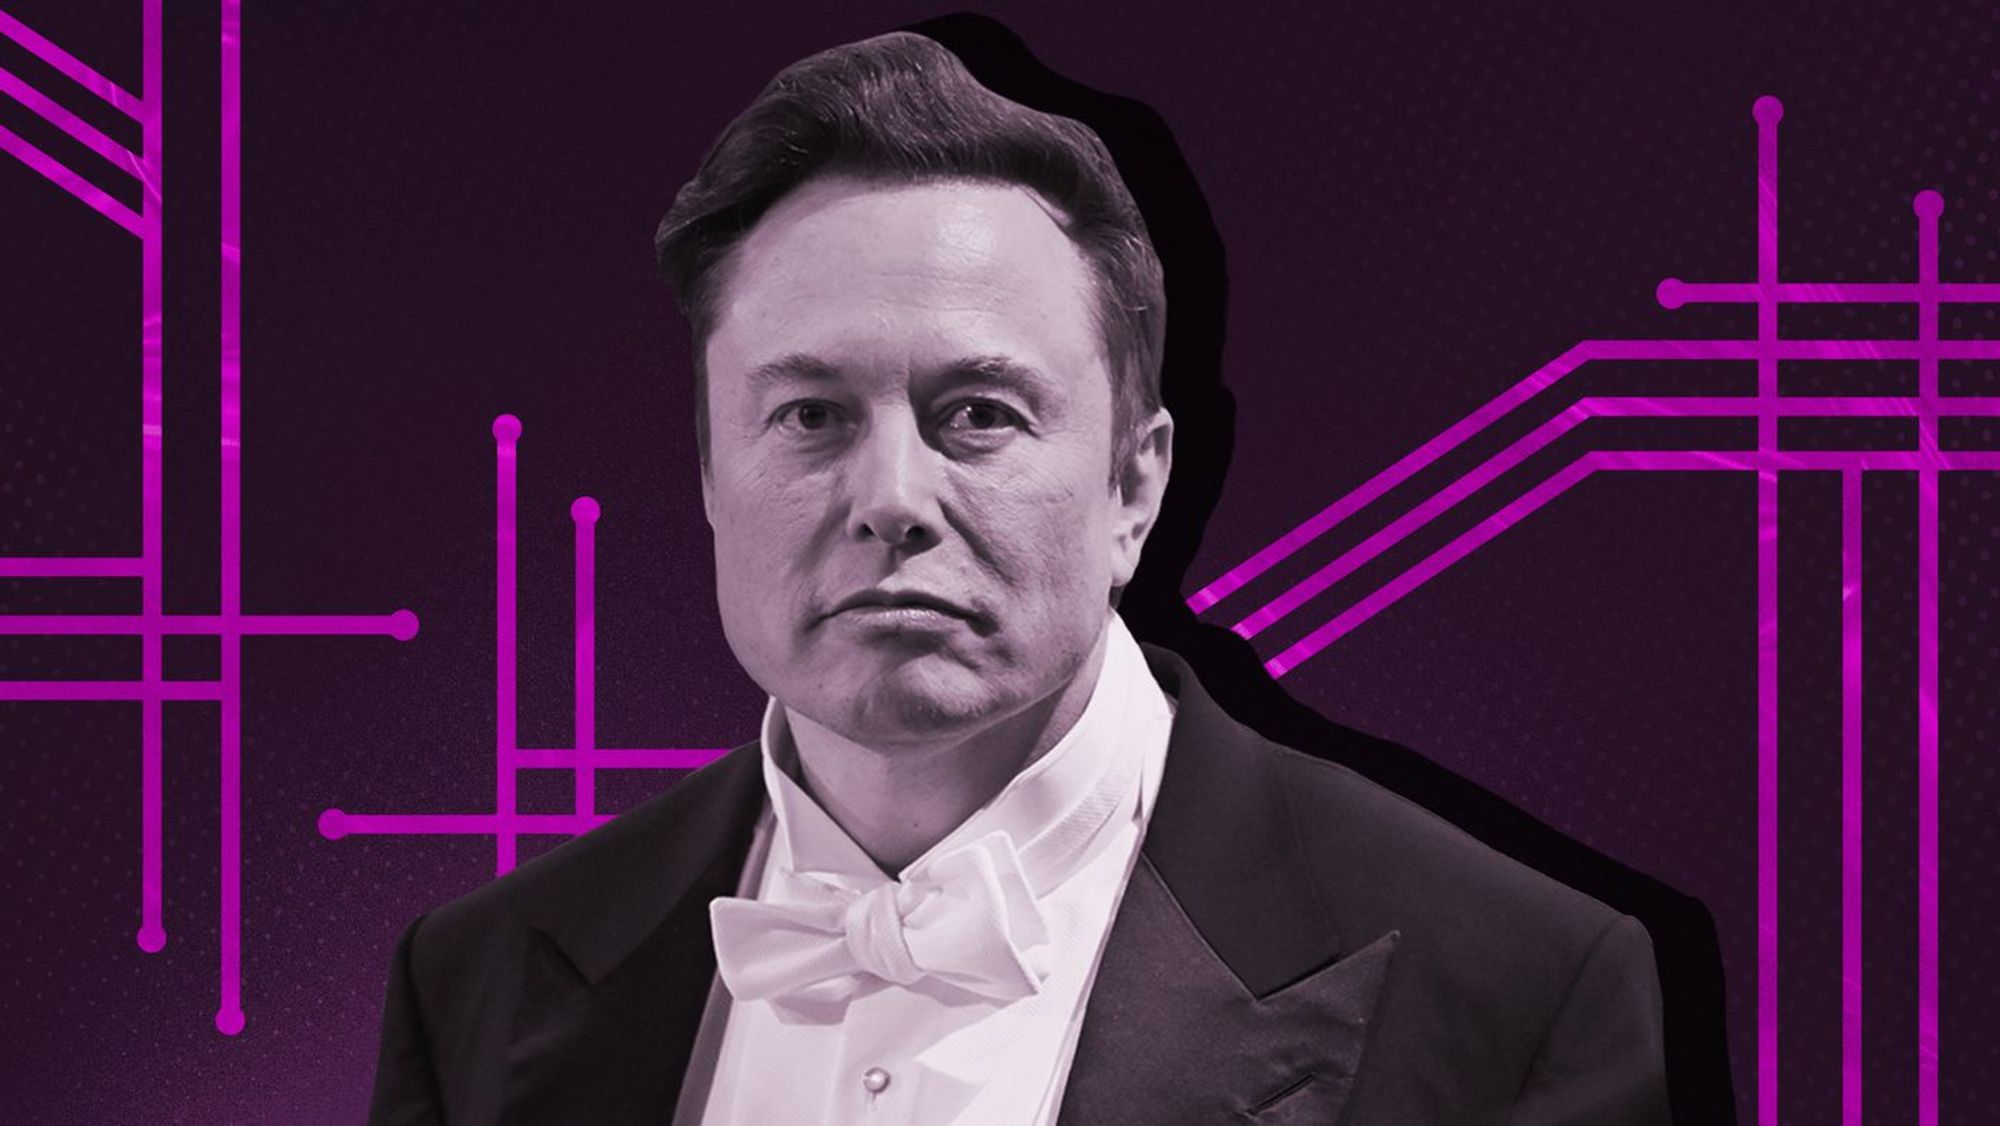 Elon Musk founds new AI company called X.AI